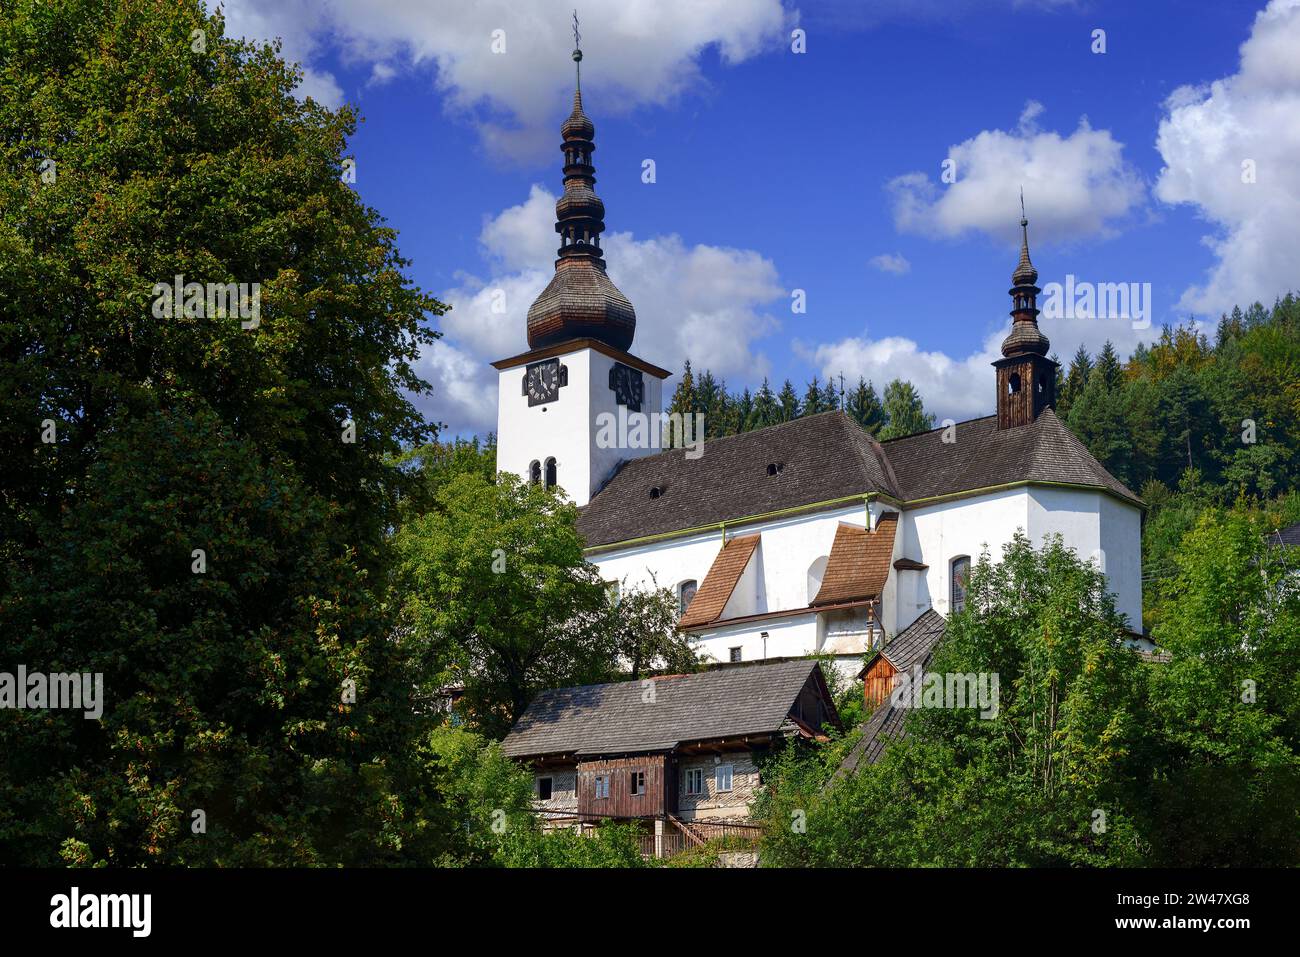 Kirche, Spania Dolina oder Herrengrund, Kreis Banska Bystrica, Region Horehronie, Slowakei Stockfoto